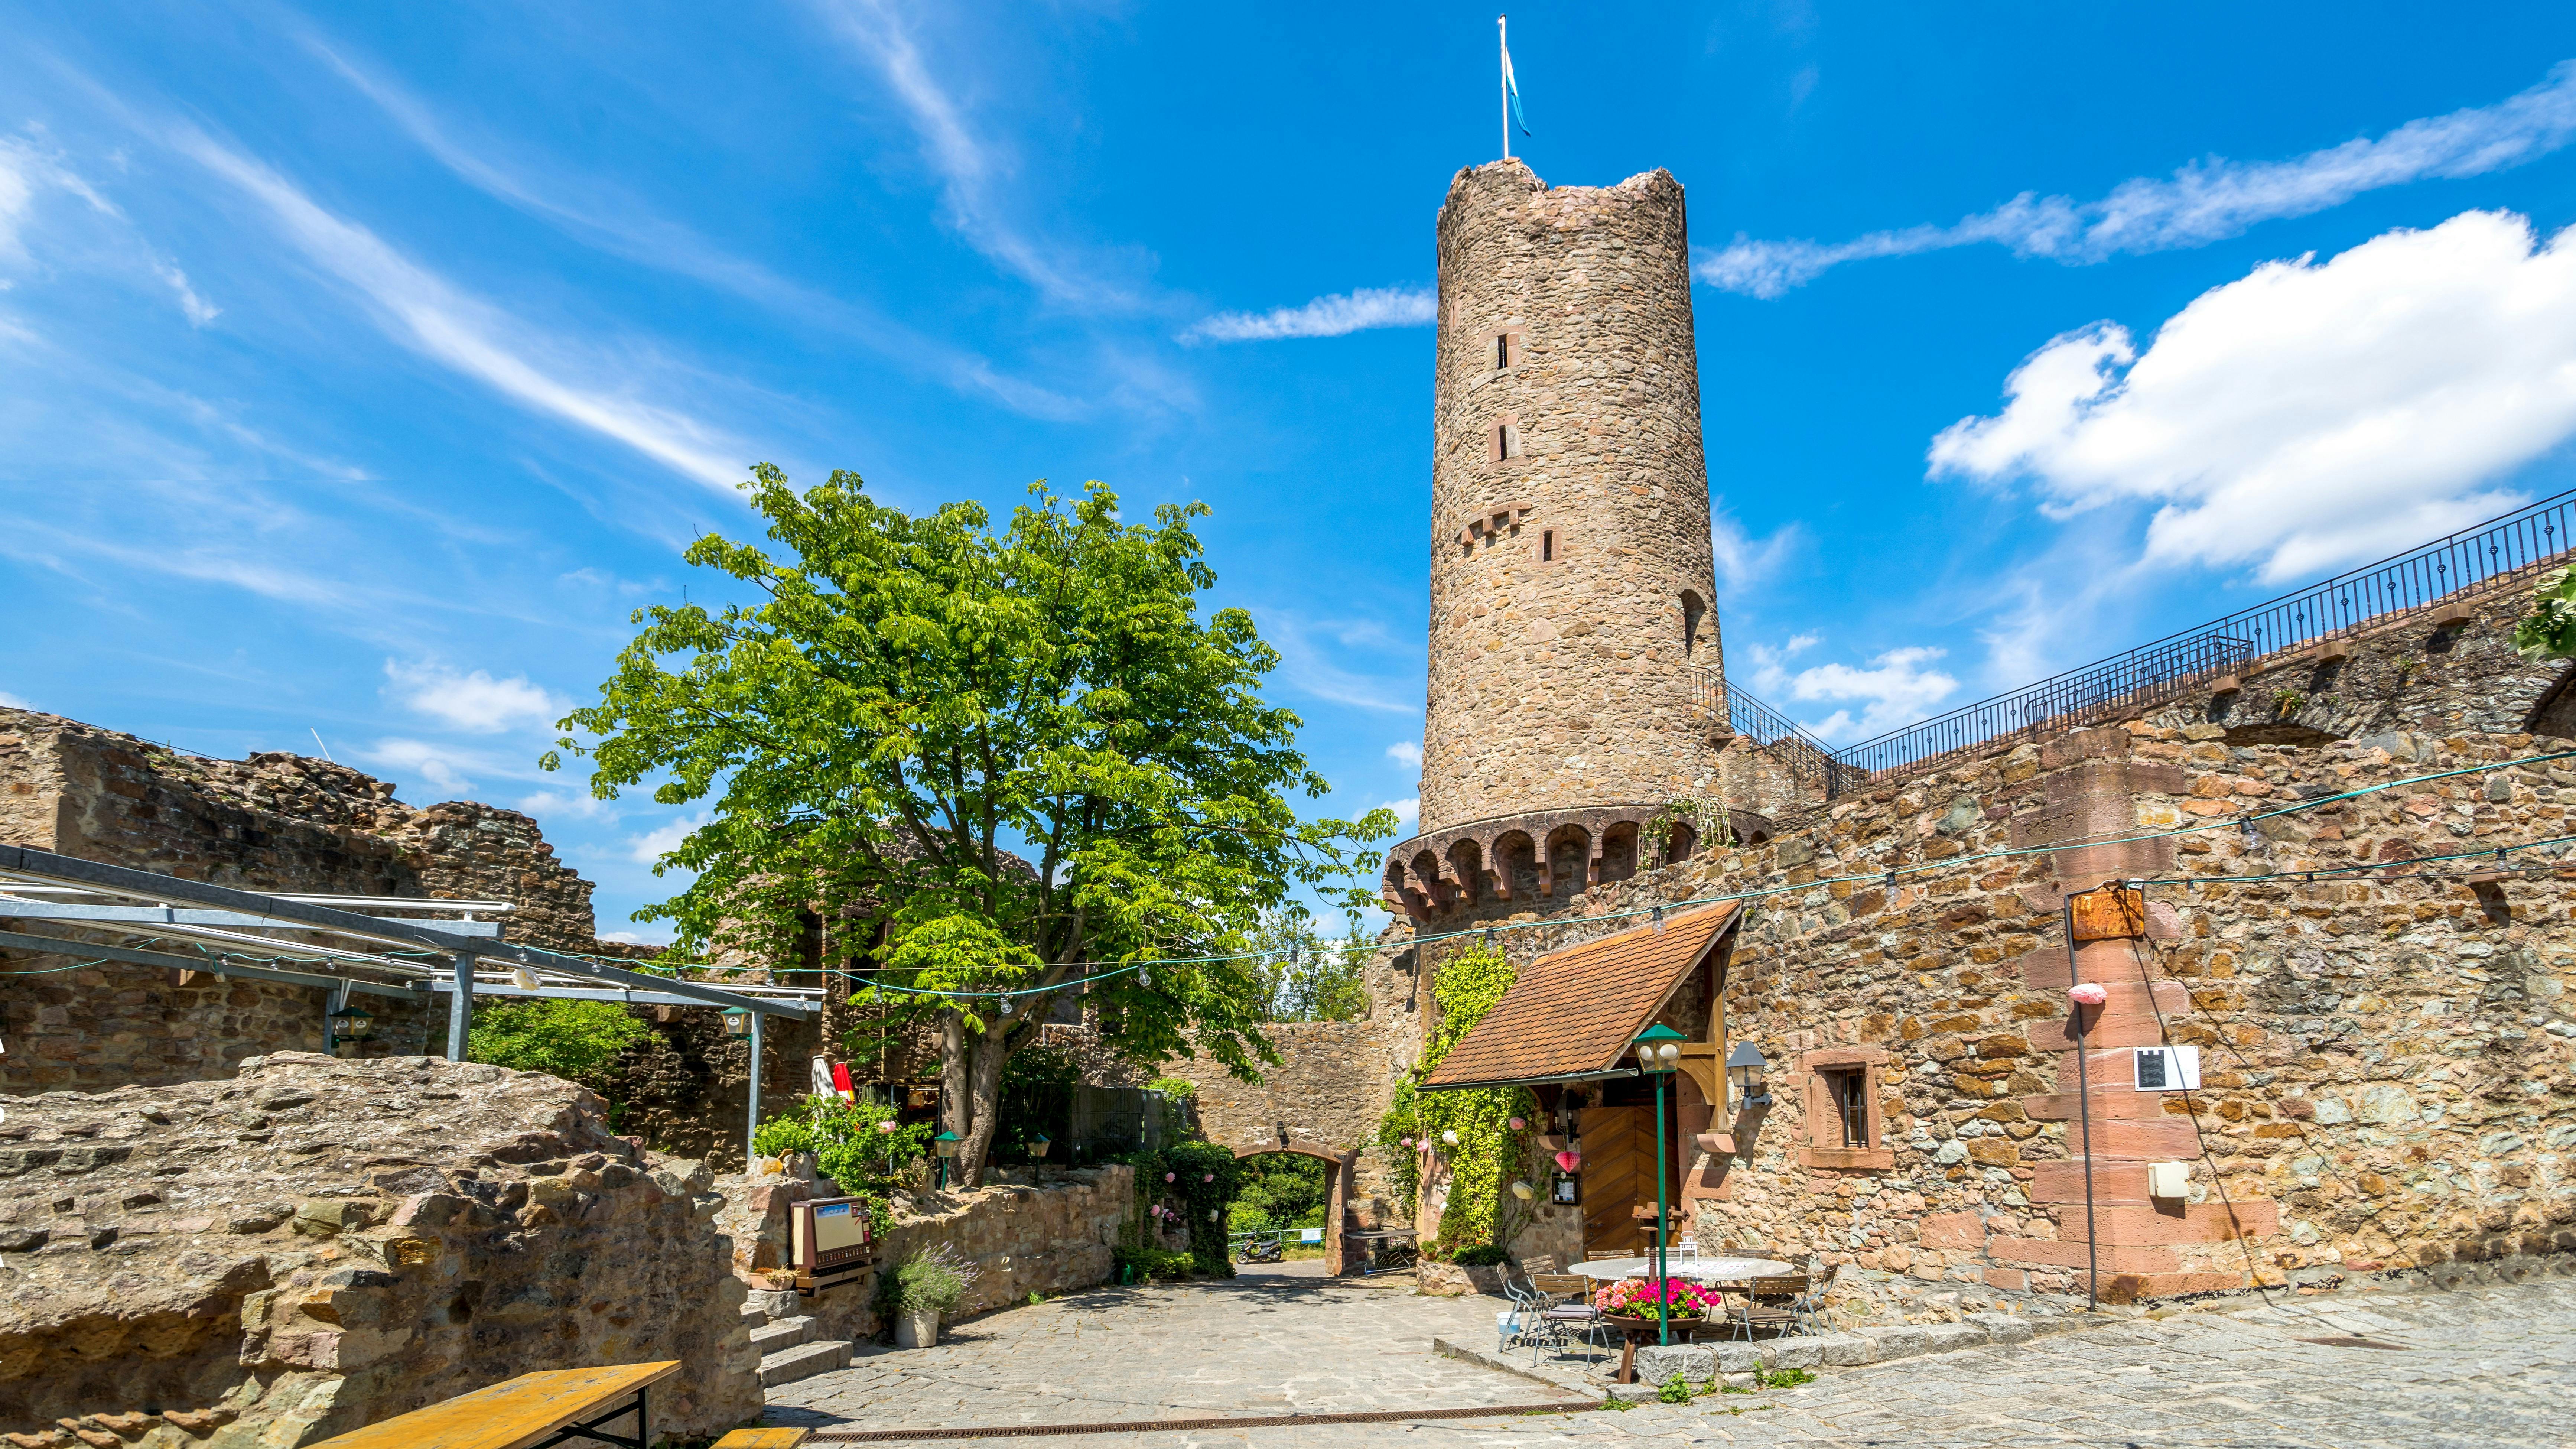 Segway tour to Windeck Castle in Weinheim Musement